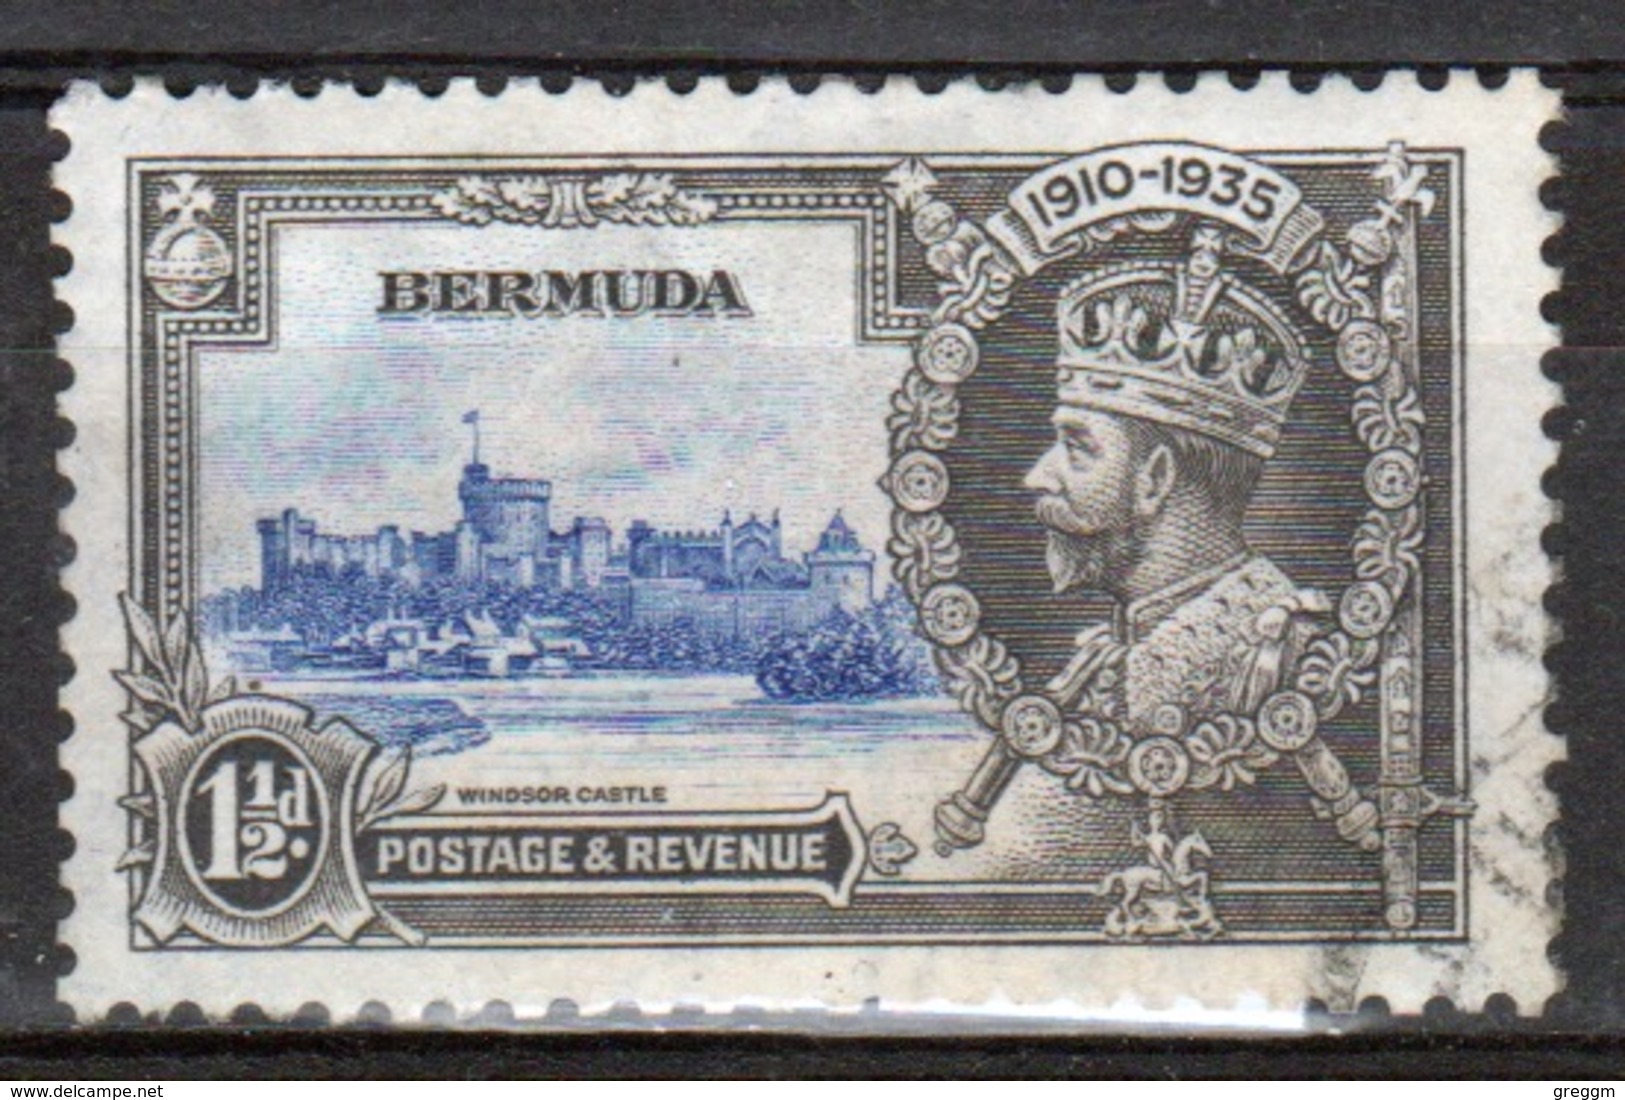 Bermuda George V 1½d Single Stamp From The 1935 Silver Jubilee Set. - Bermuda